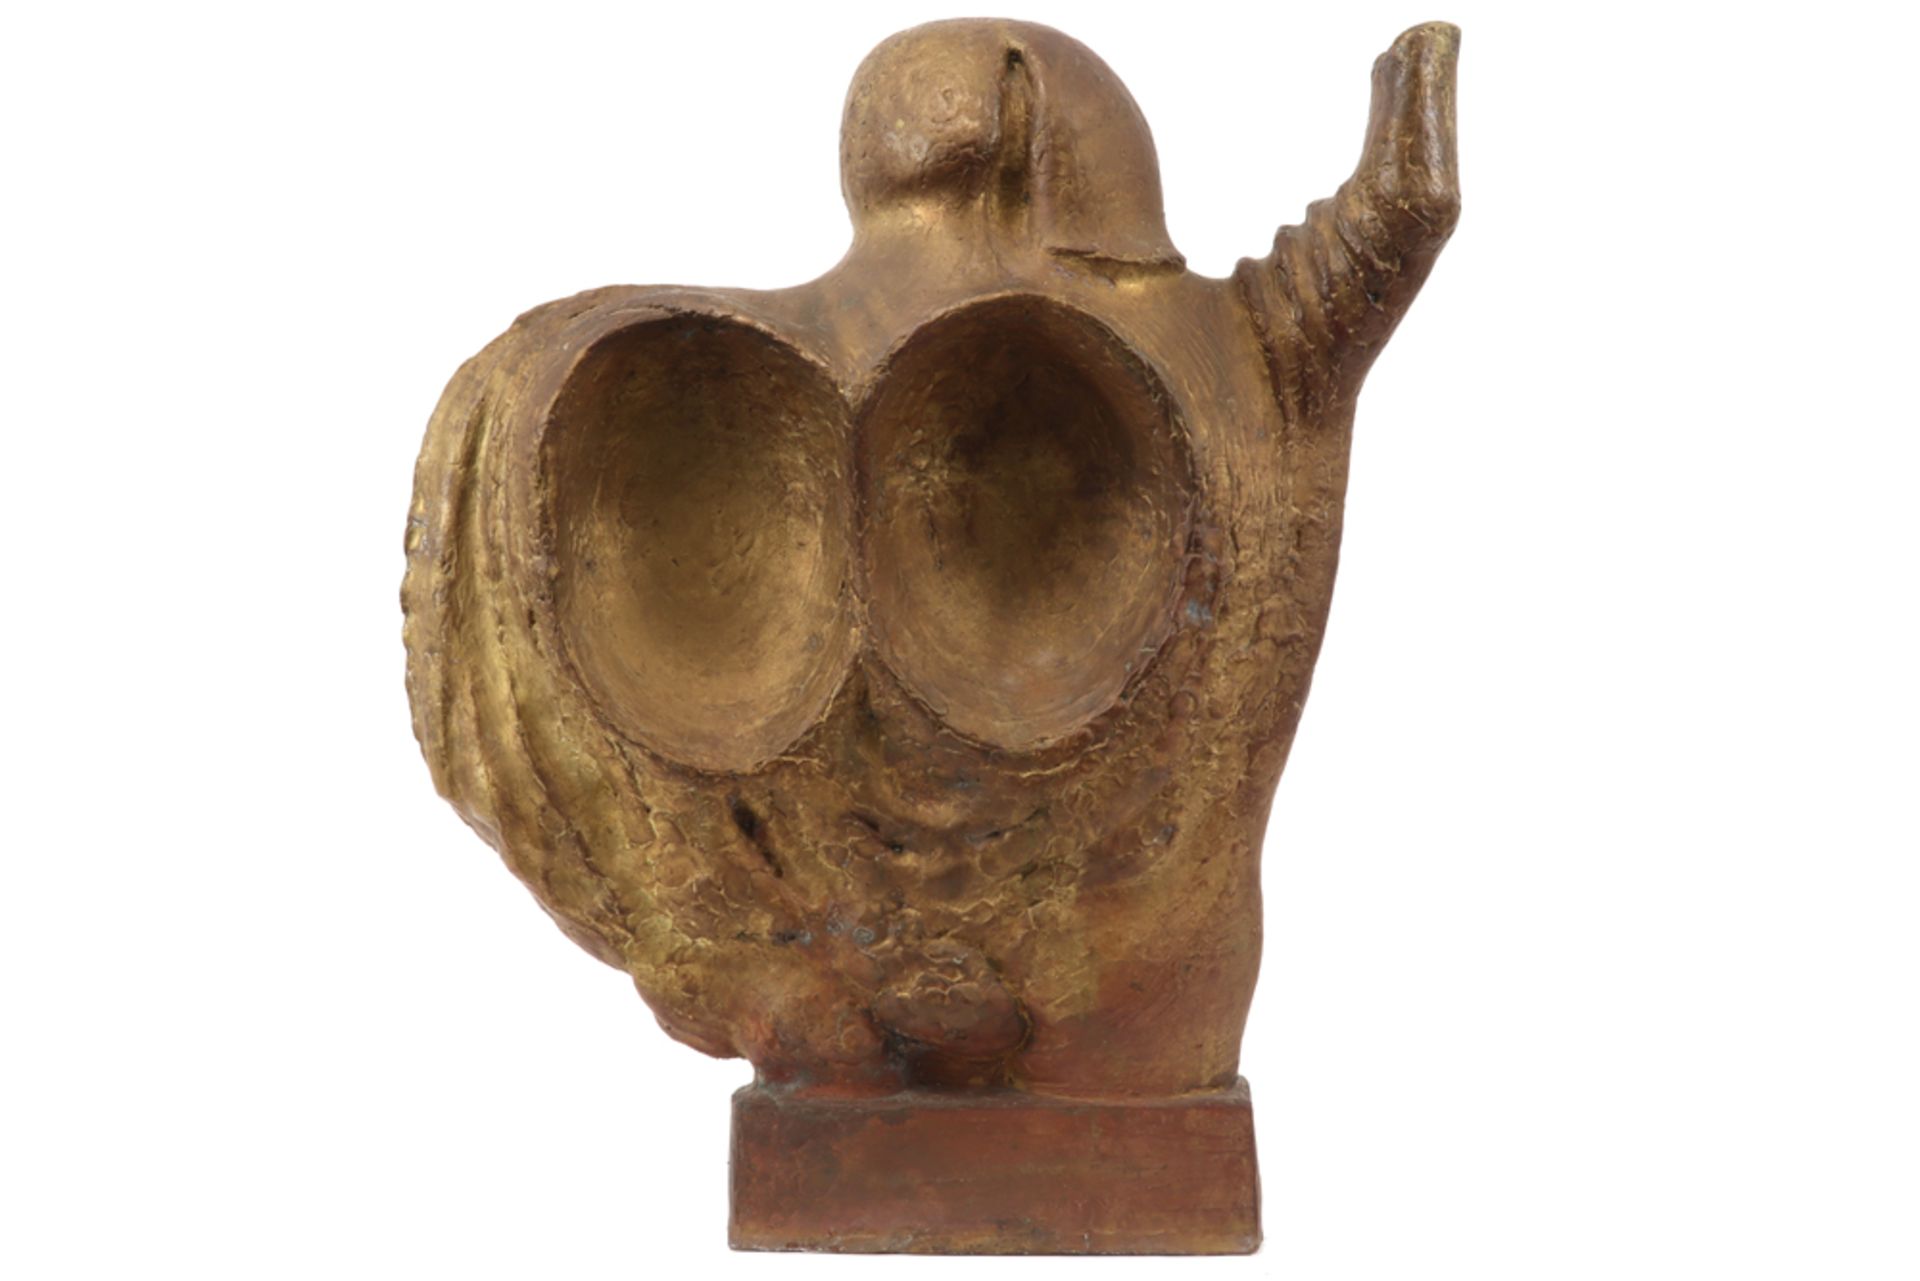 20th Cent. Belgian sculpture in bronze - with monogram of Monique Guebels ||GUEBELS MONIQUE (° 1921)